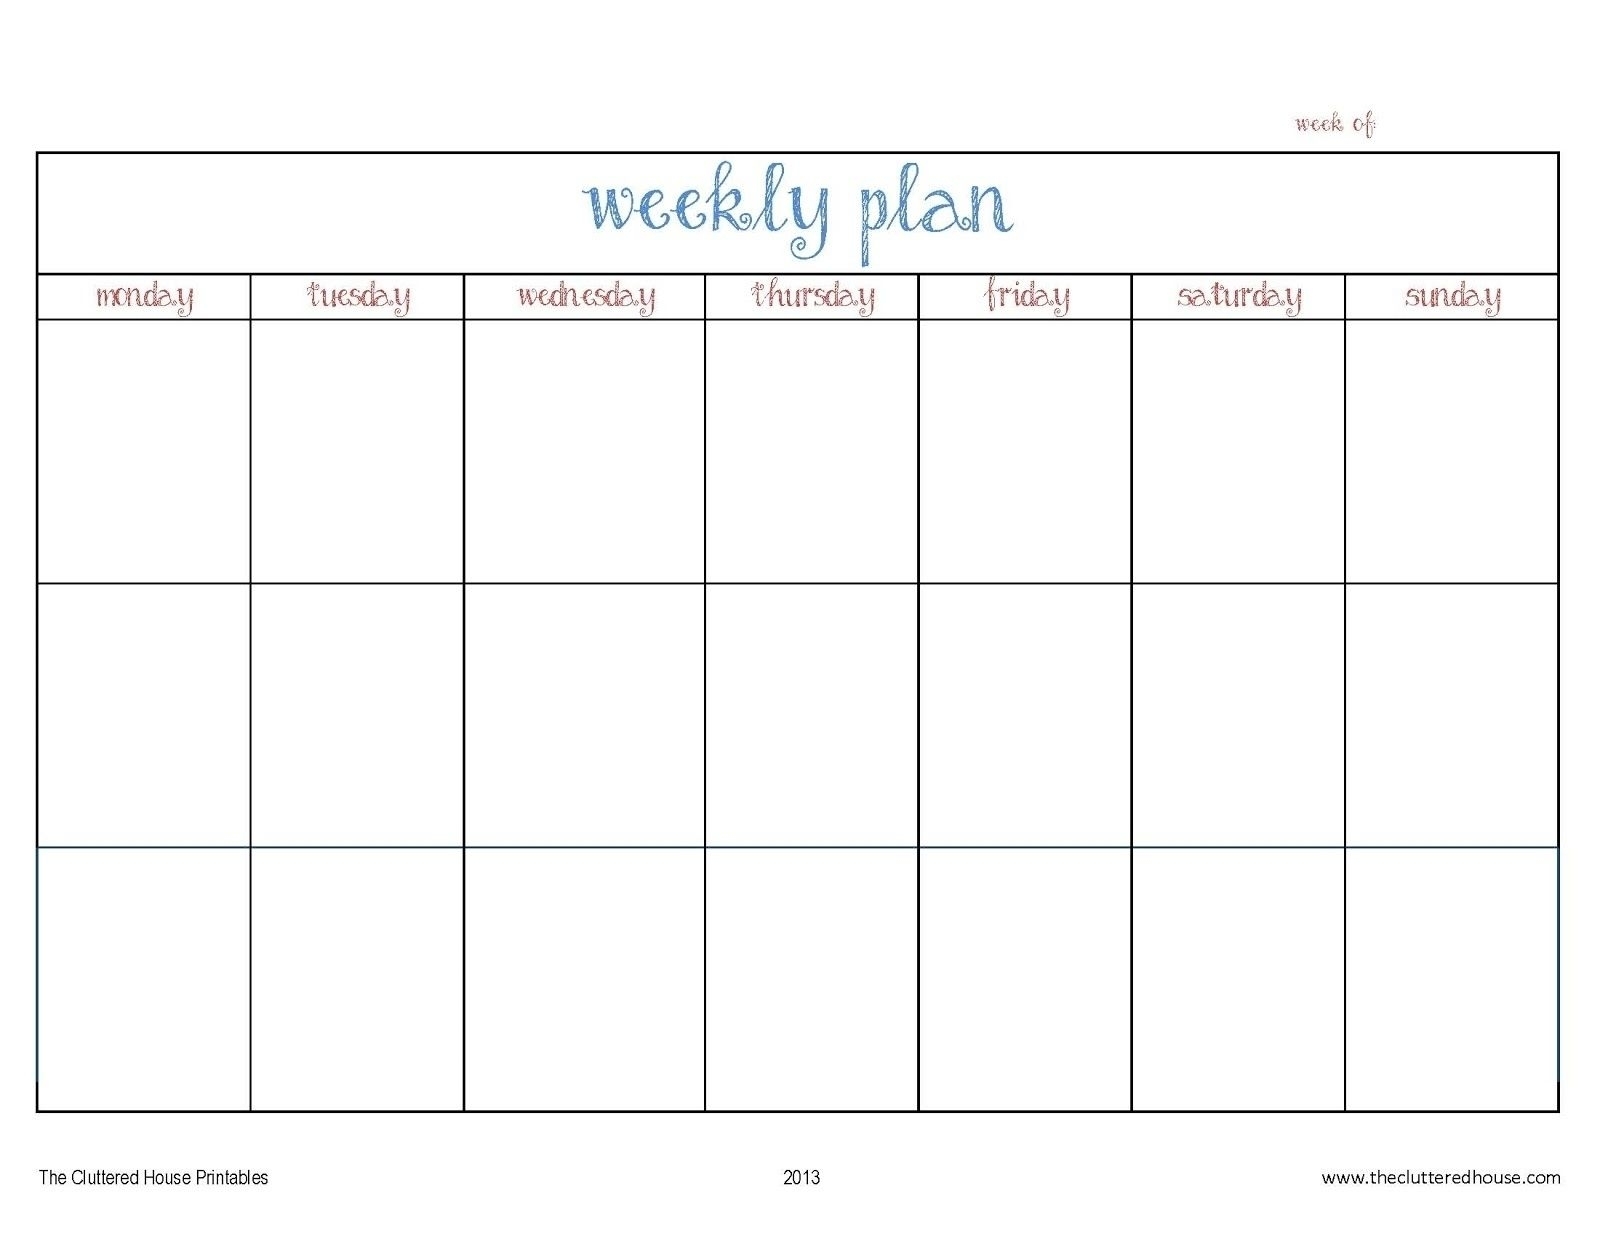 Day Lank Calendar Free Week Template Printable Schedule | Smorad with 7 Day Week Calendar Template